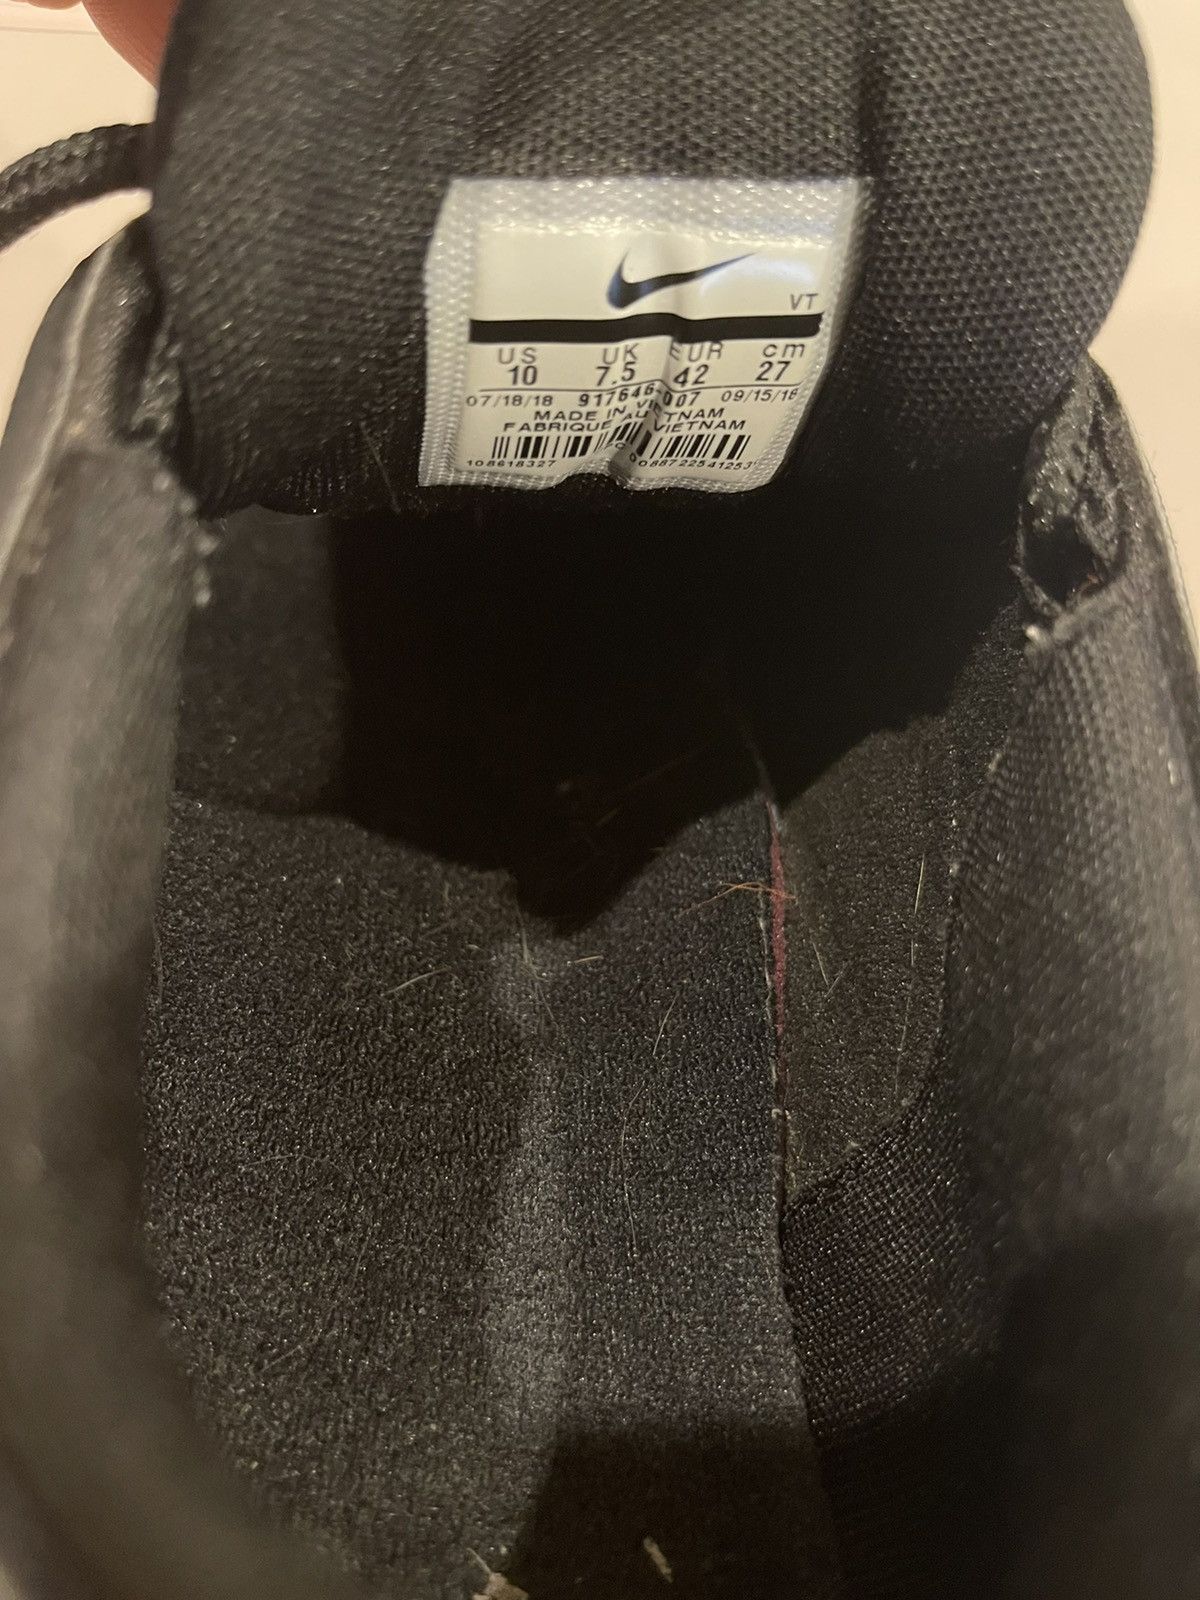 Nike Nike Airmax 97 Oreo size 10 Womens Size US 10 / EU 43 - 7 Thumbnail